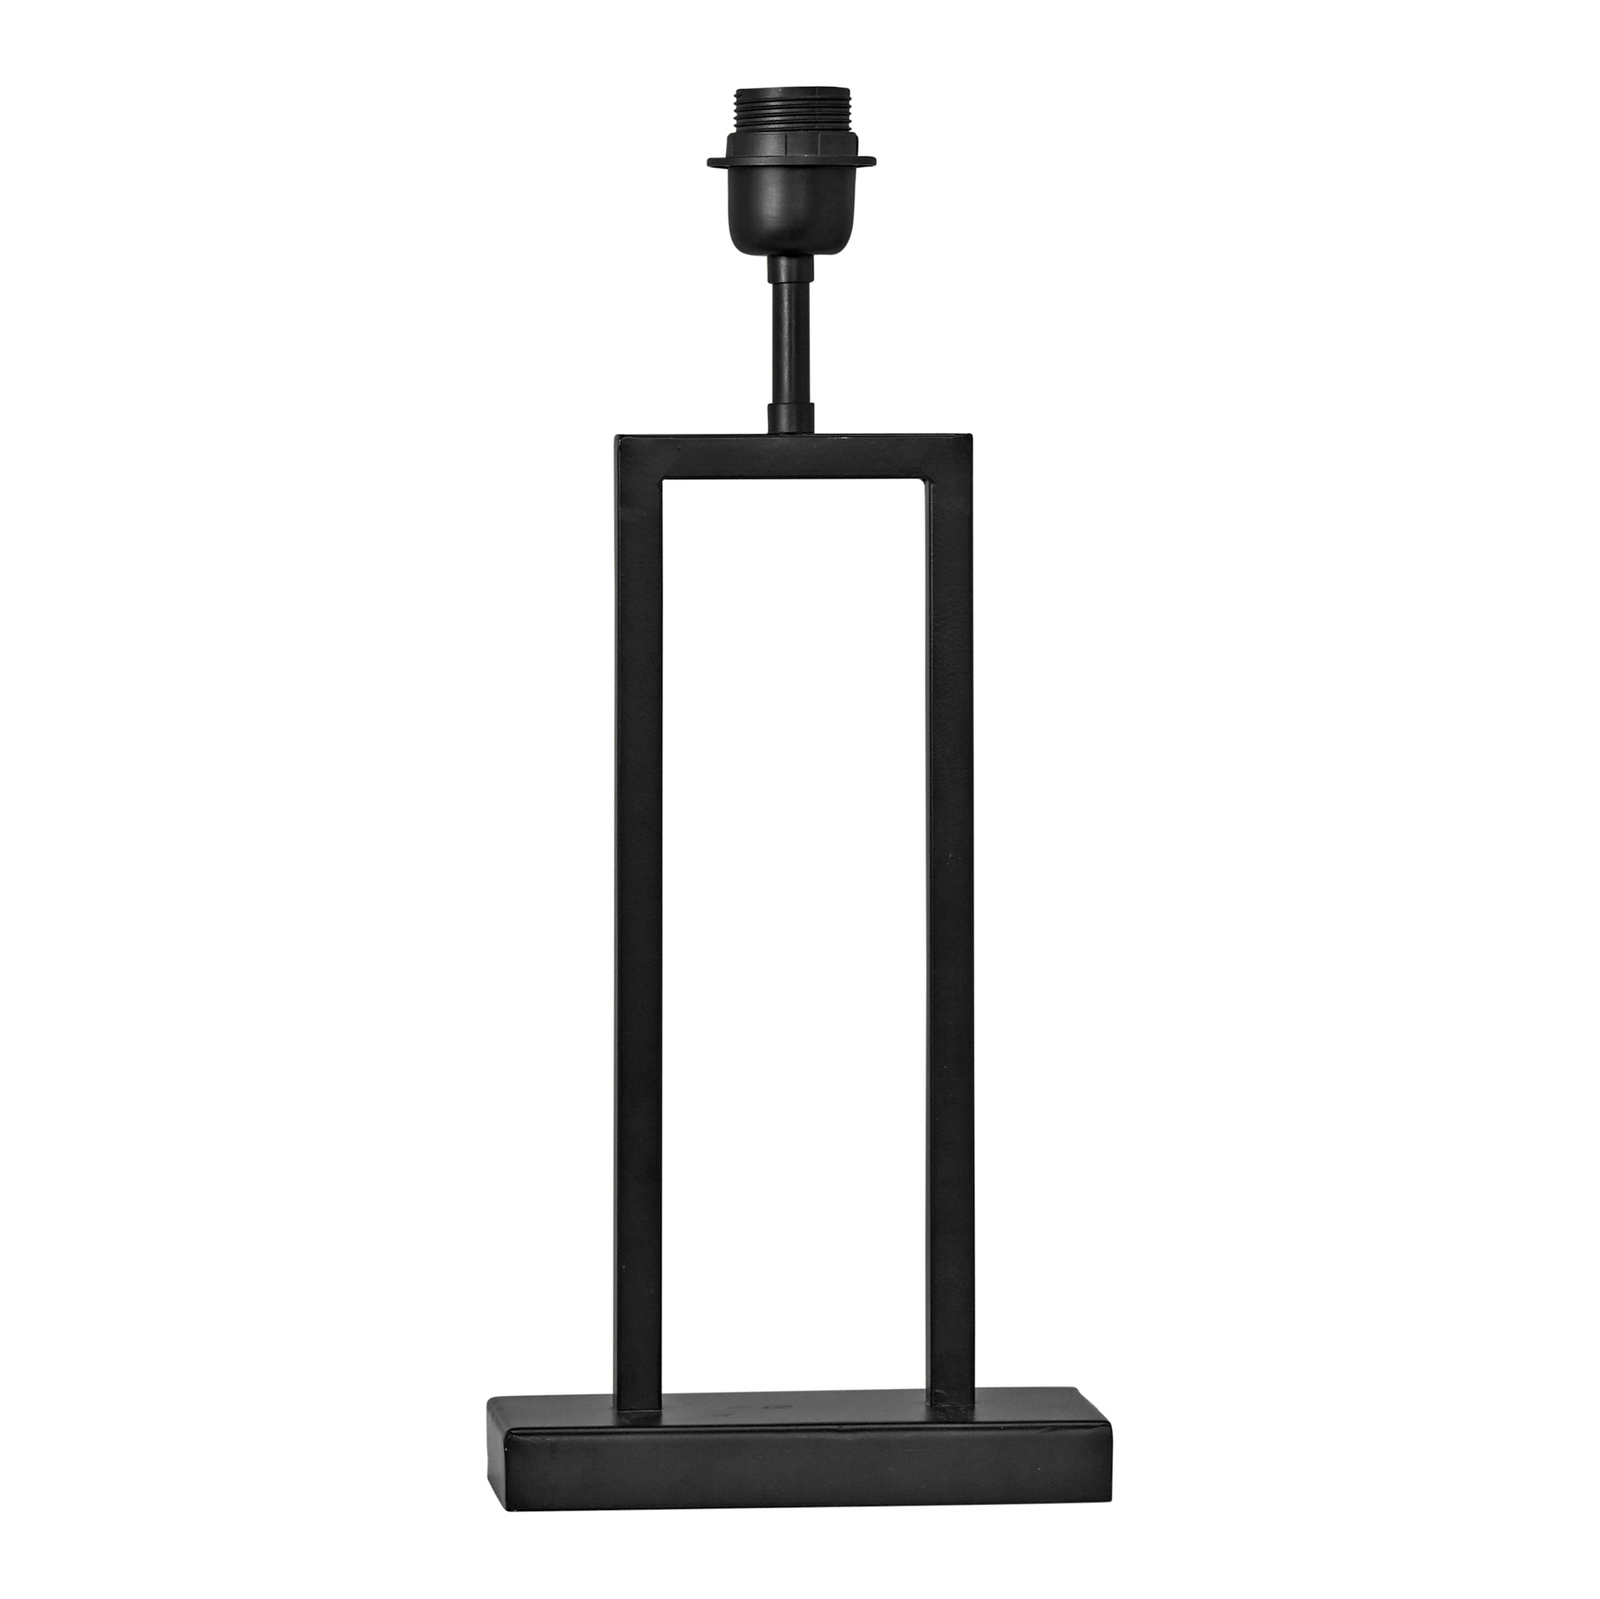 PR Home Rod bordslampa helt i svart